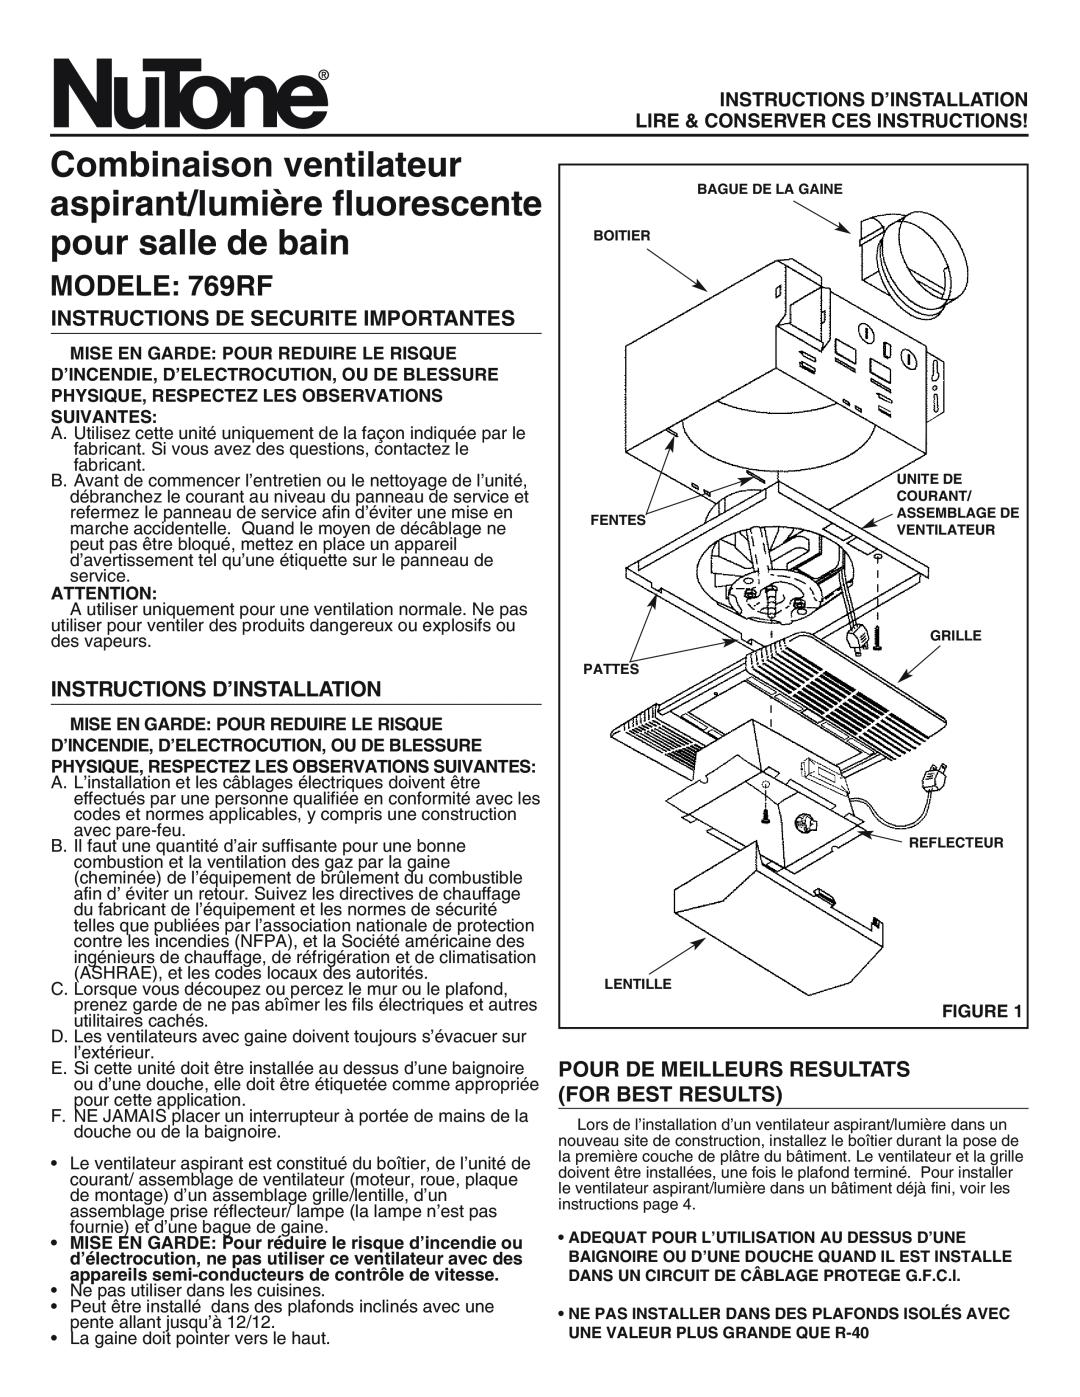 NuTone installation instructions MODELE 769RF, Instructions De Securite Importantes, Instructions D’Installation 